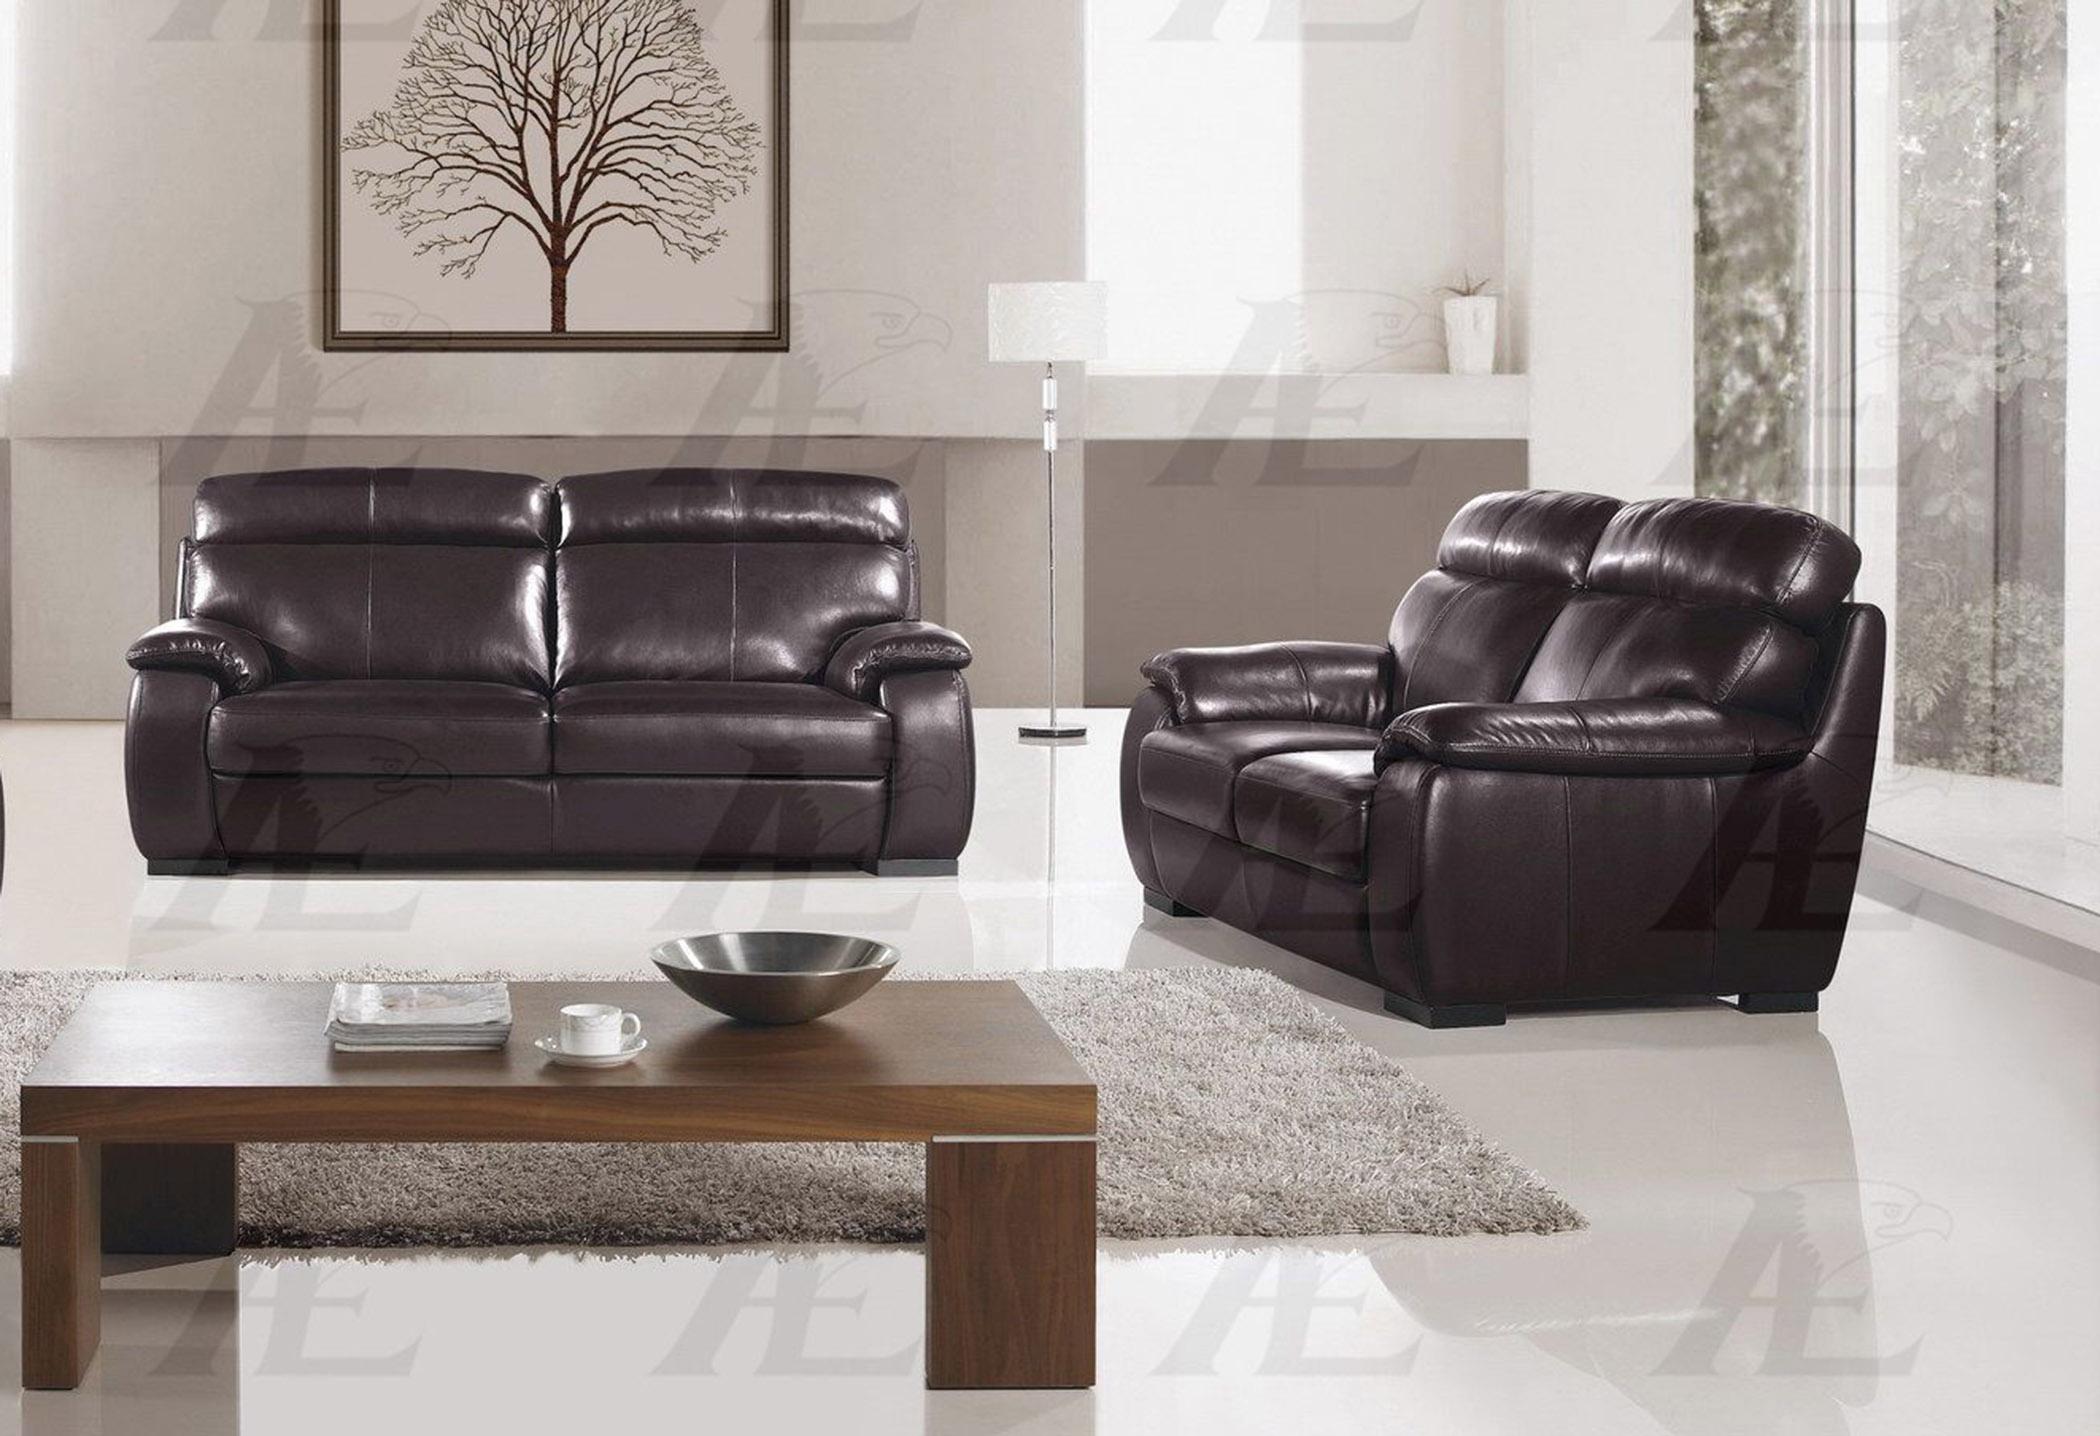 

    
American Eagle Furniture EK011-DB Dark Chocolate  Sofa Loveseat and Chair Set Italian Leather 3Pcs
